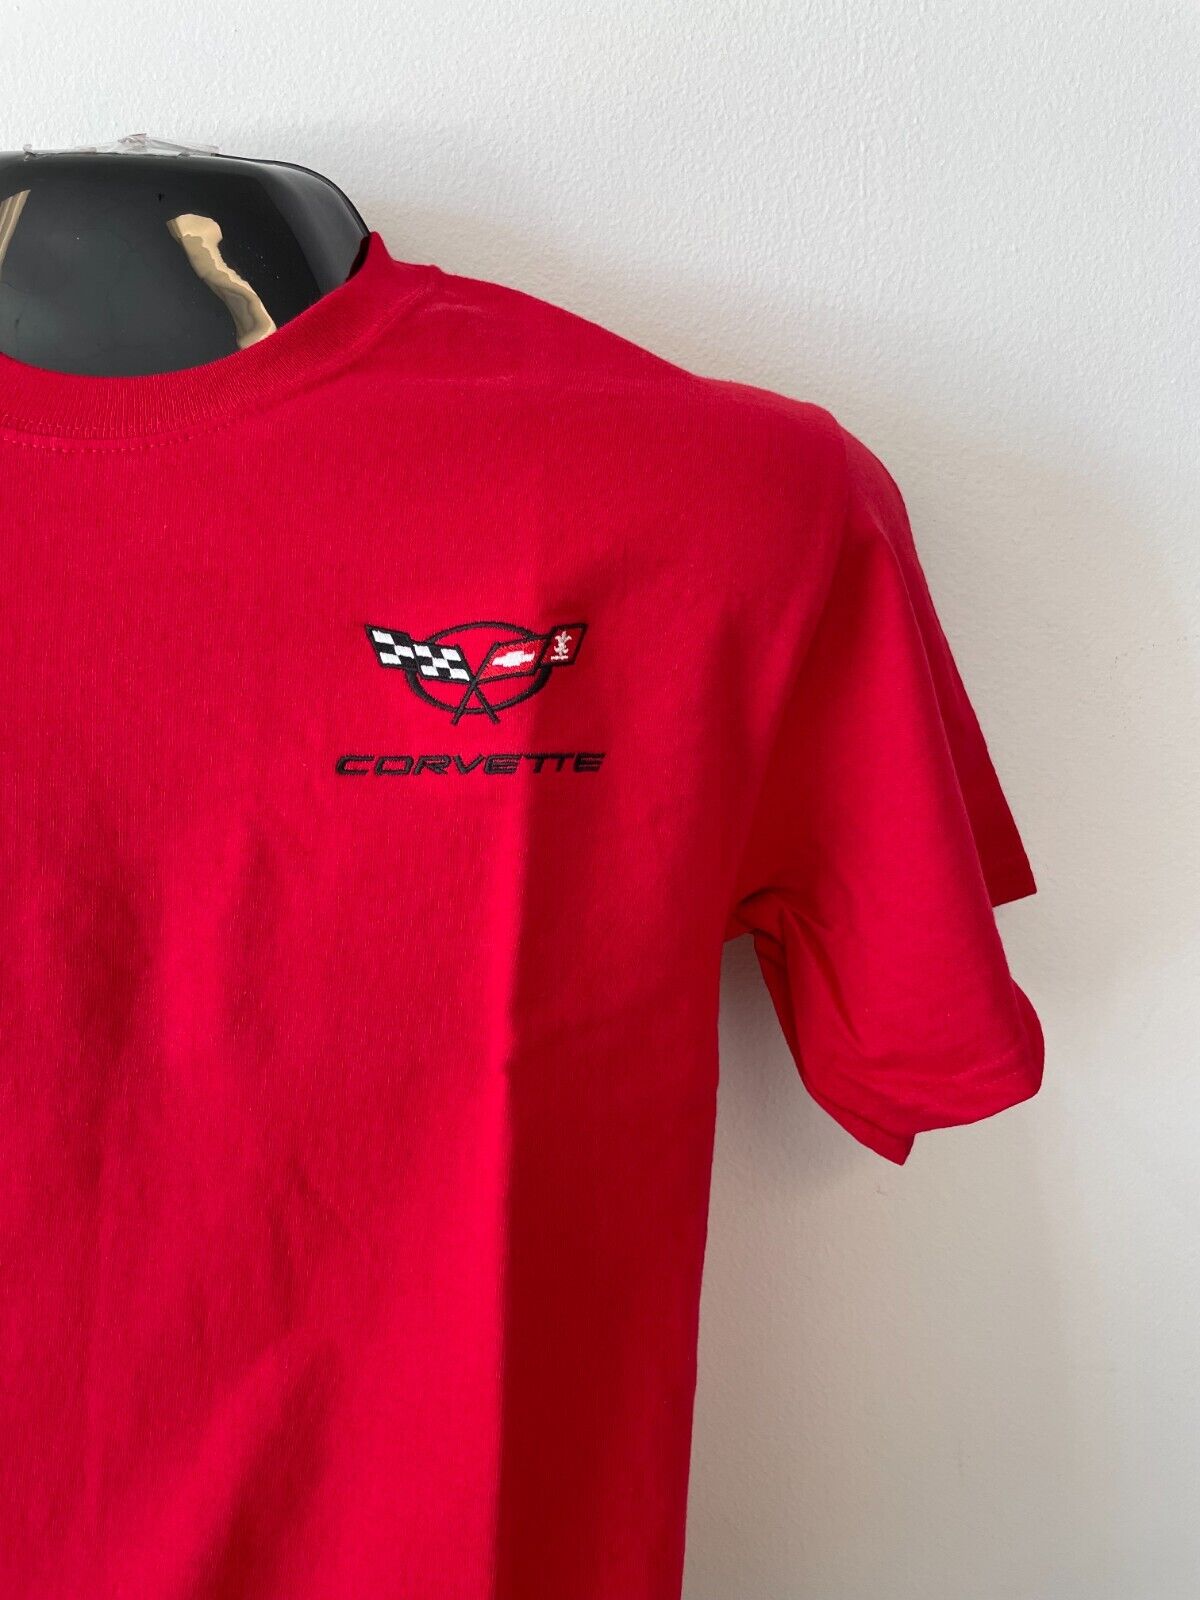 C5 Corvette T-Shirt Red, White AND Black